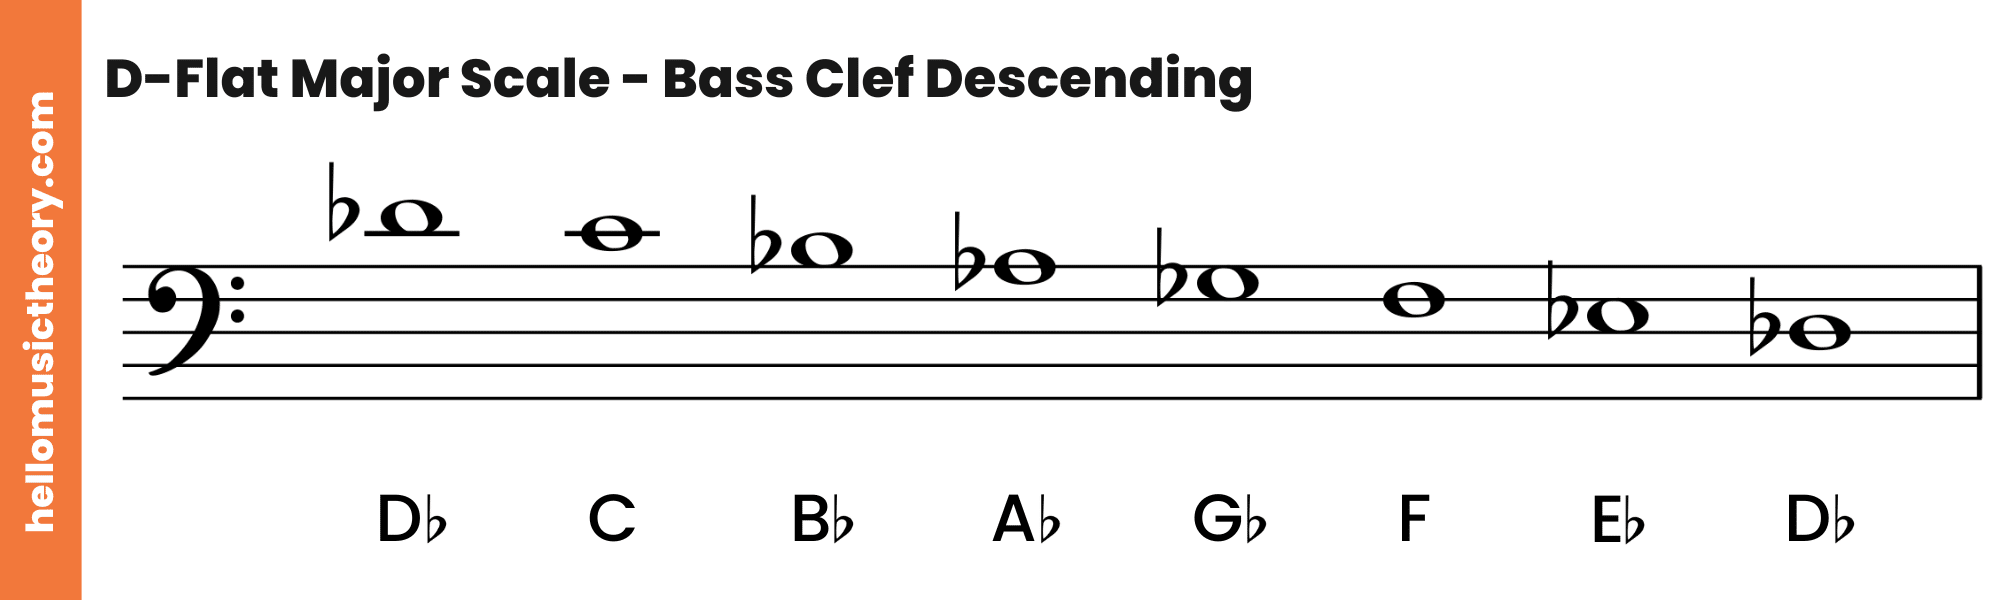 D-Flat Major Scale Bass Clef Descending